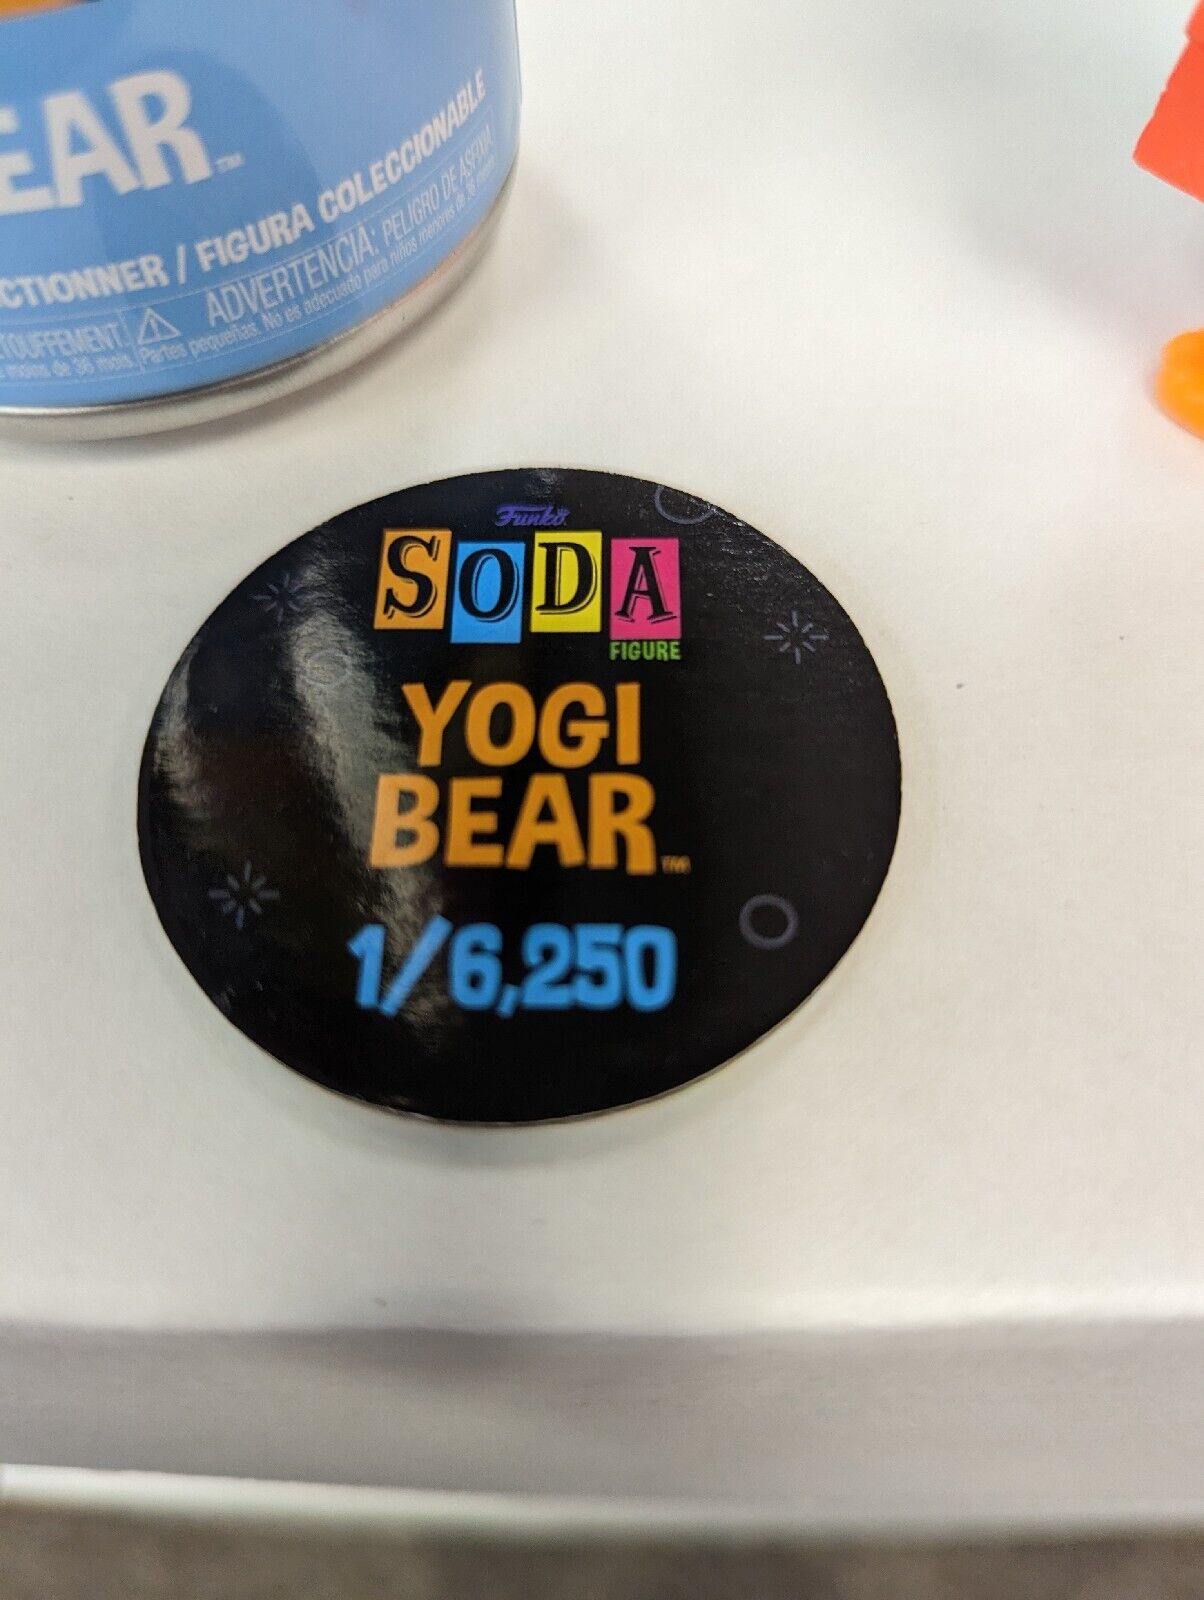 Funko Soda Yogi Bear Common 1/6250 Funkon 2022